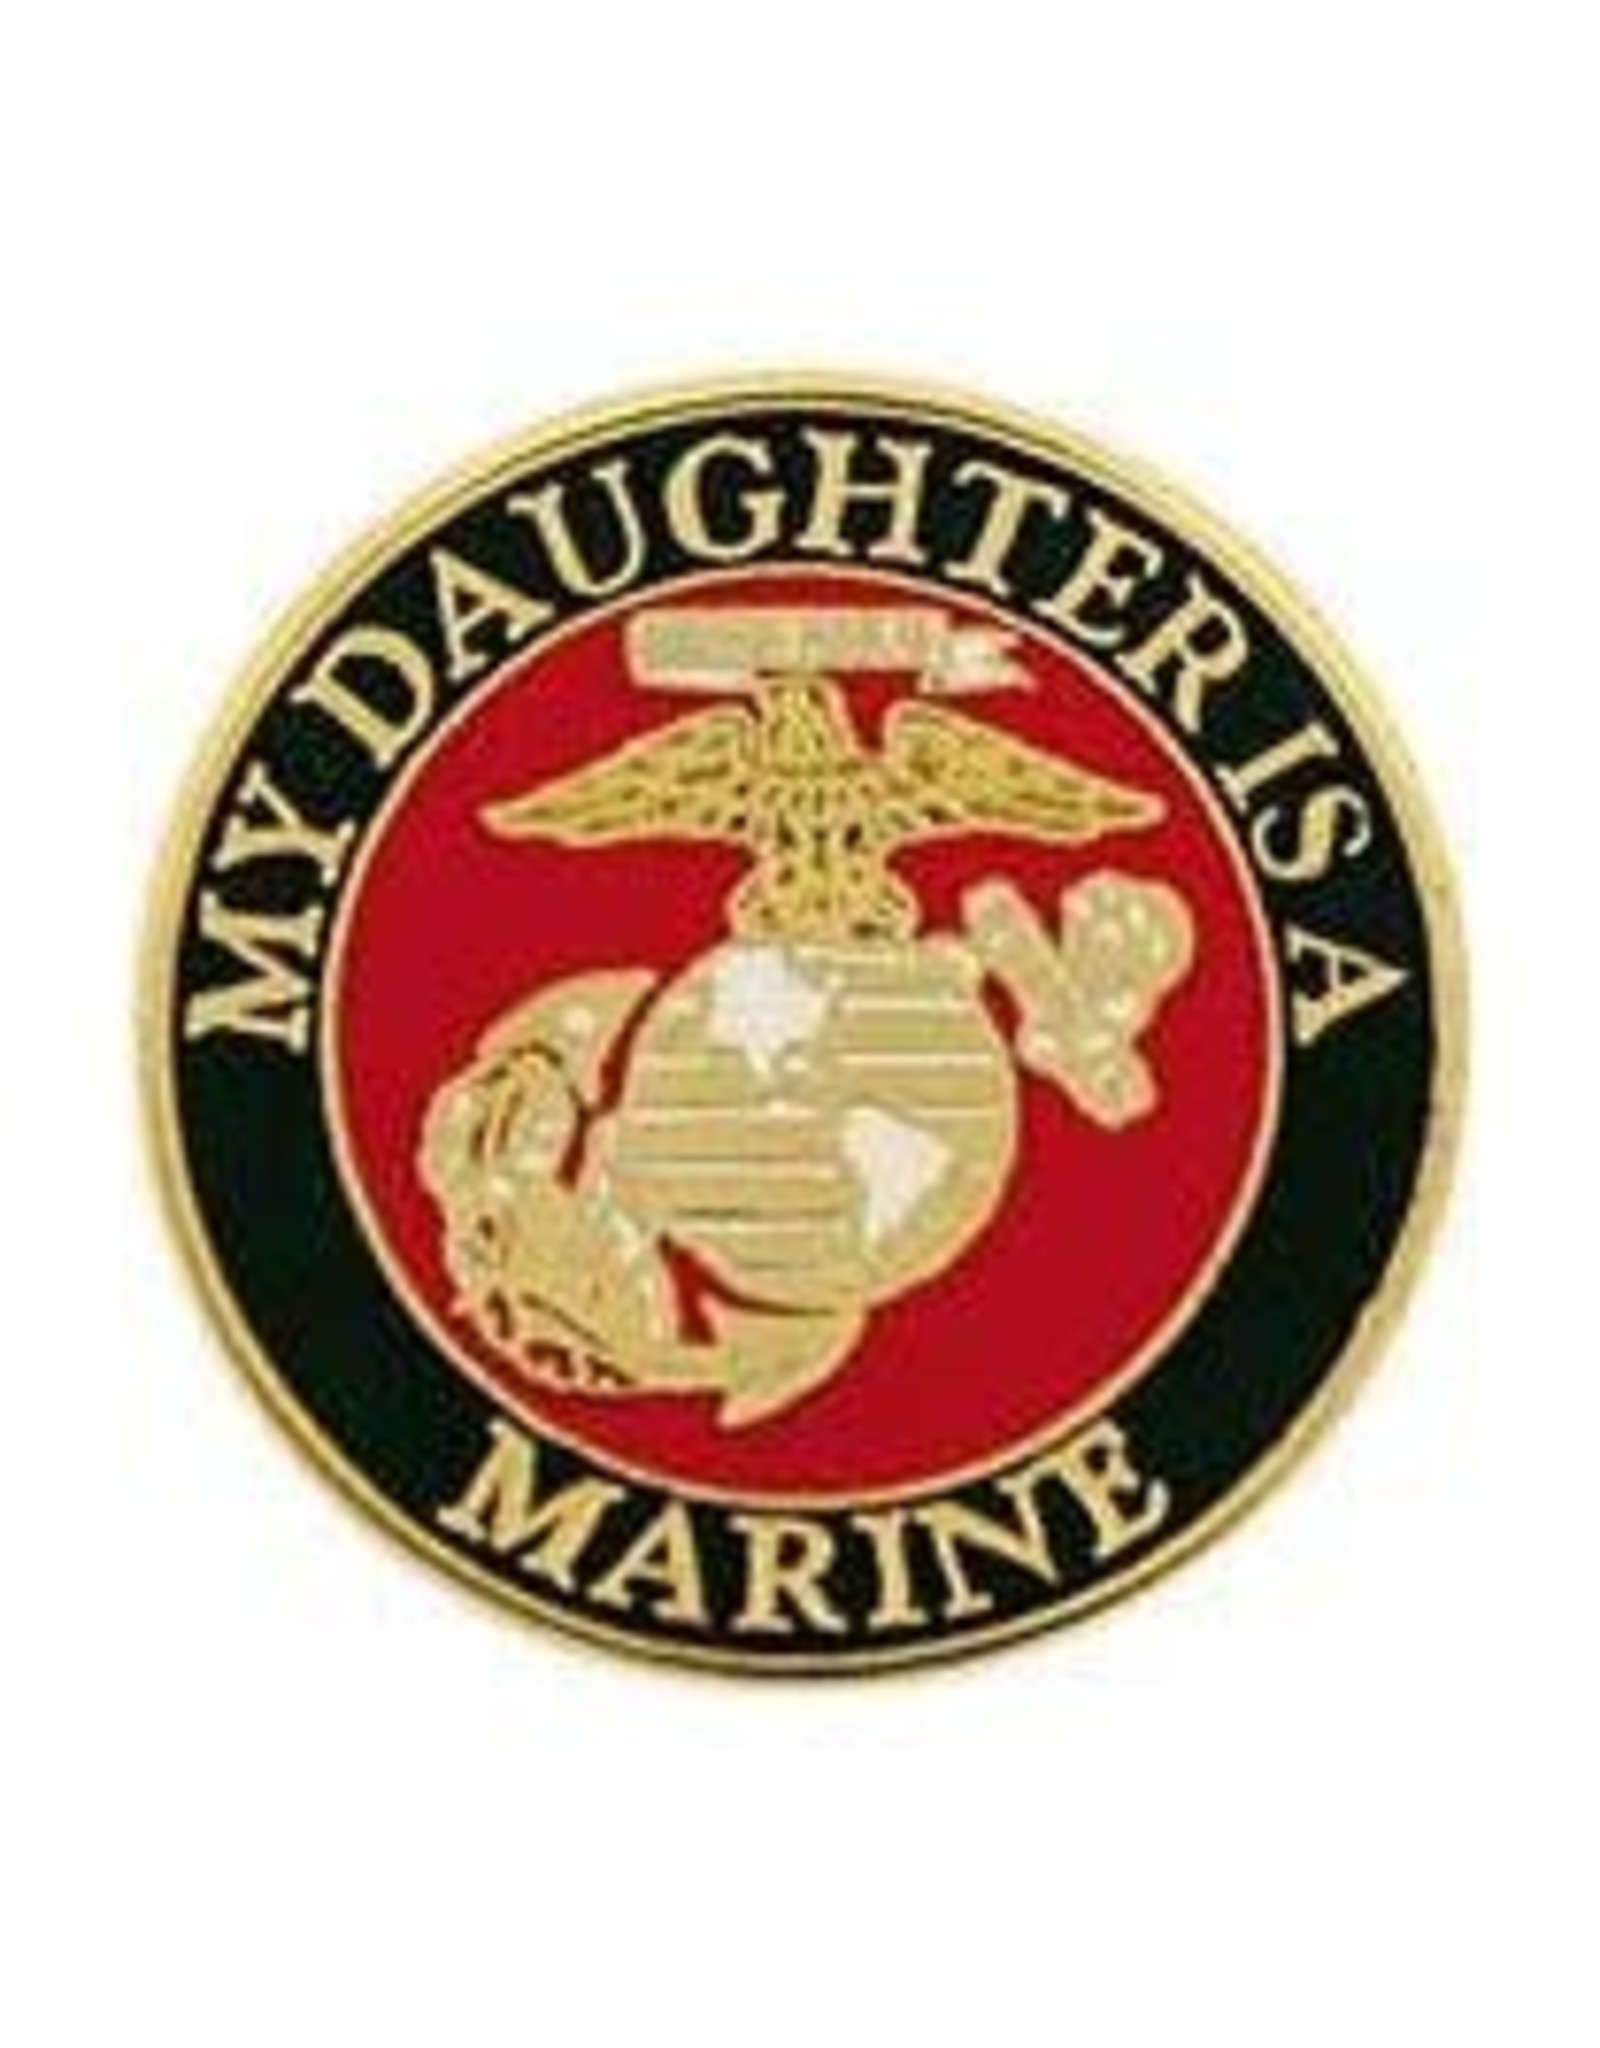 Pin - USMC Logo Daughter is a Marine